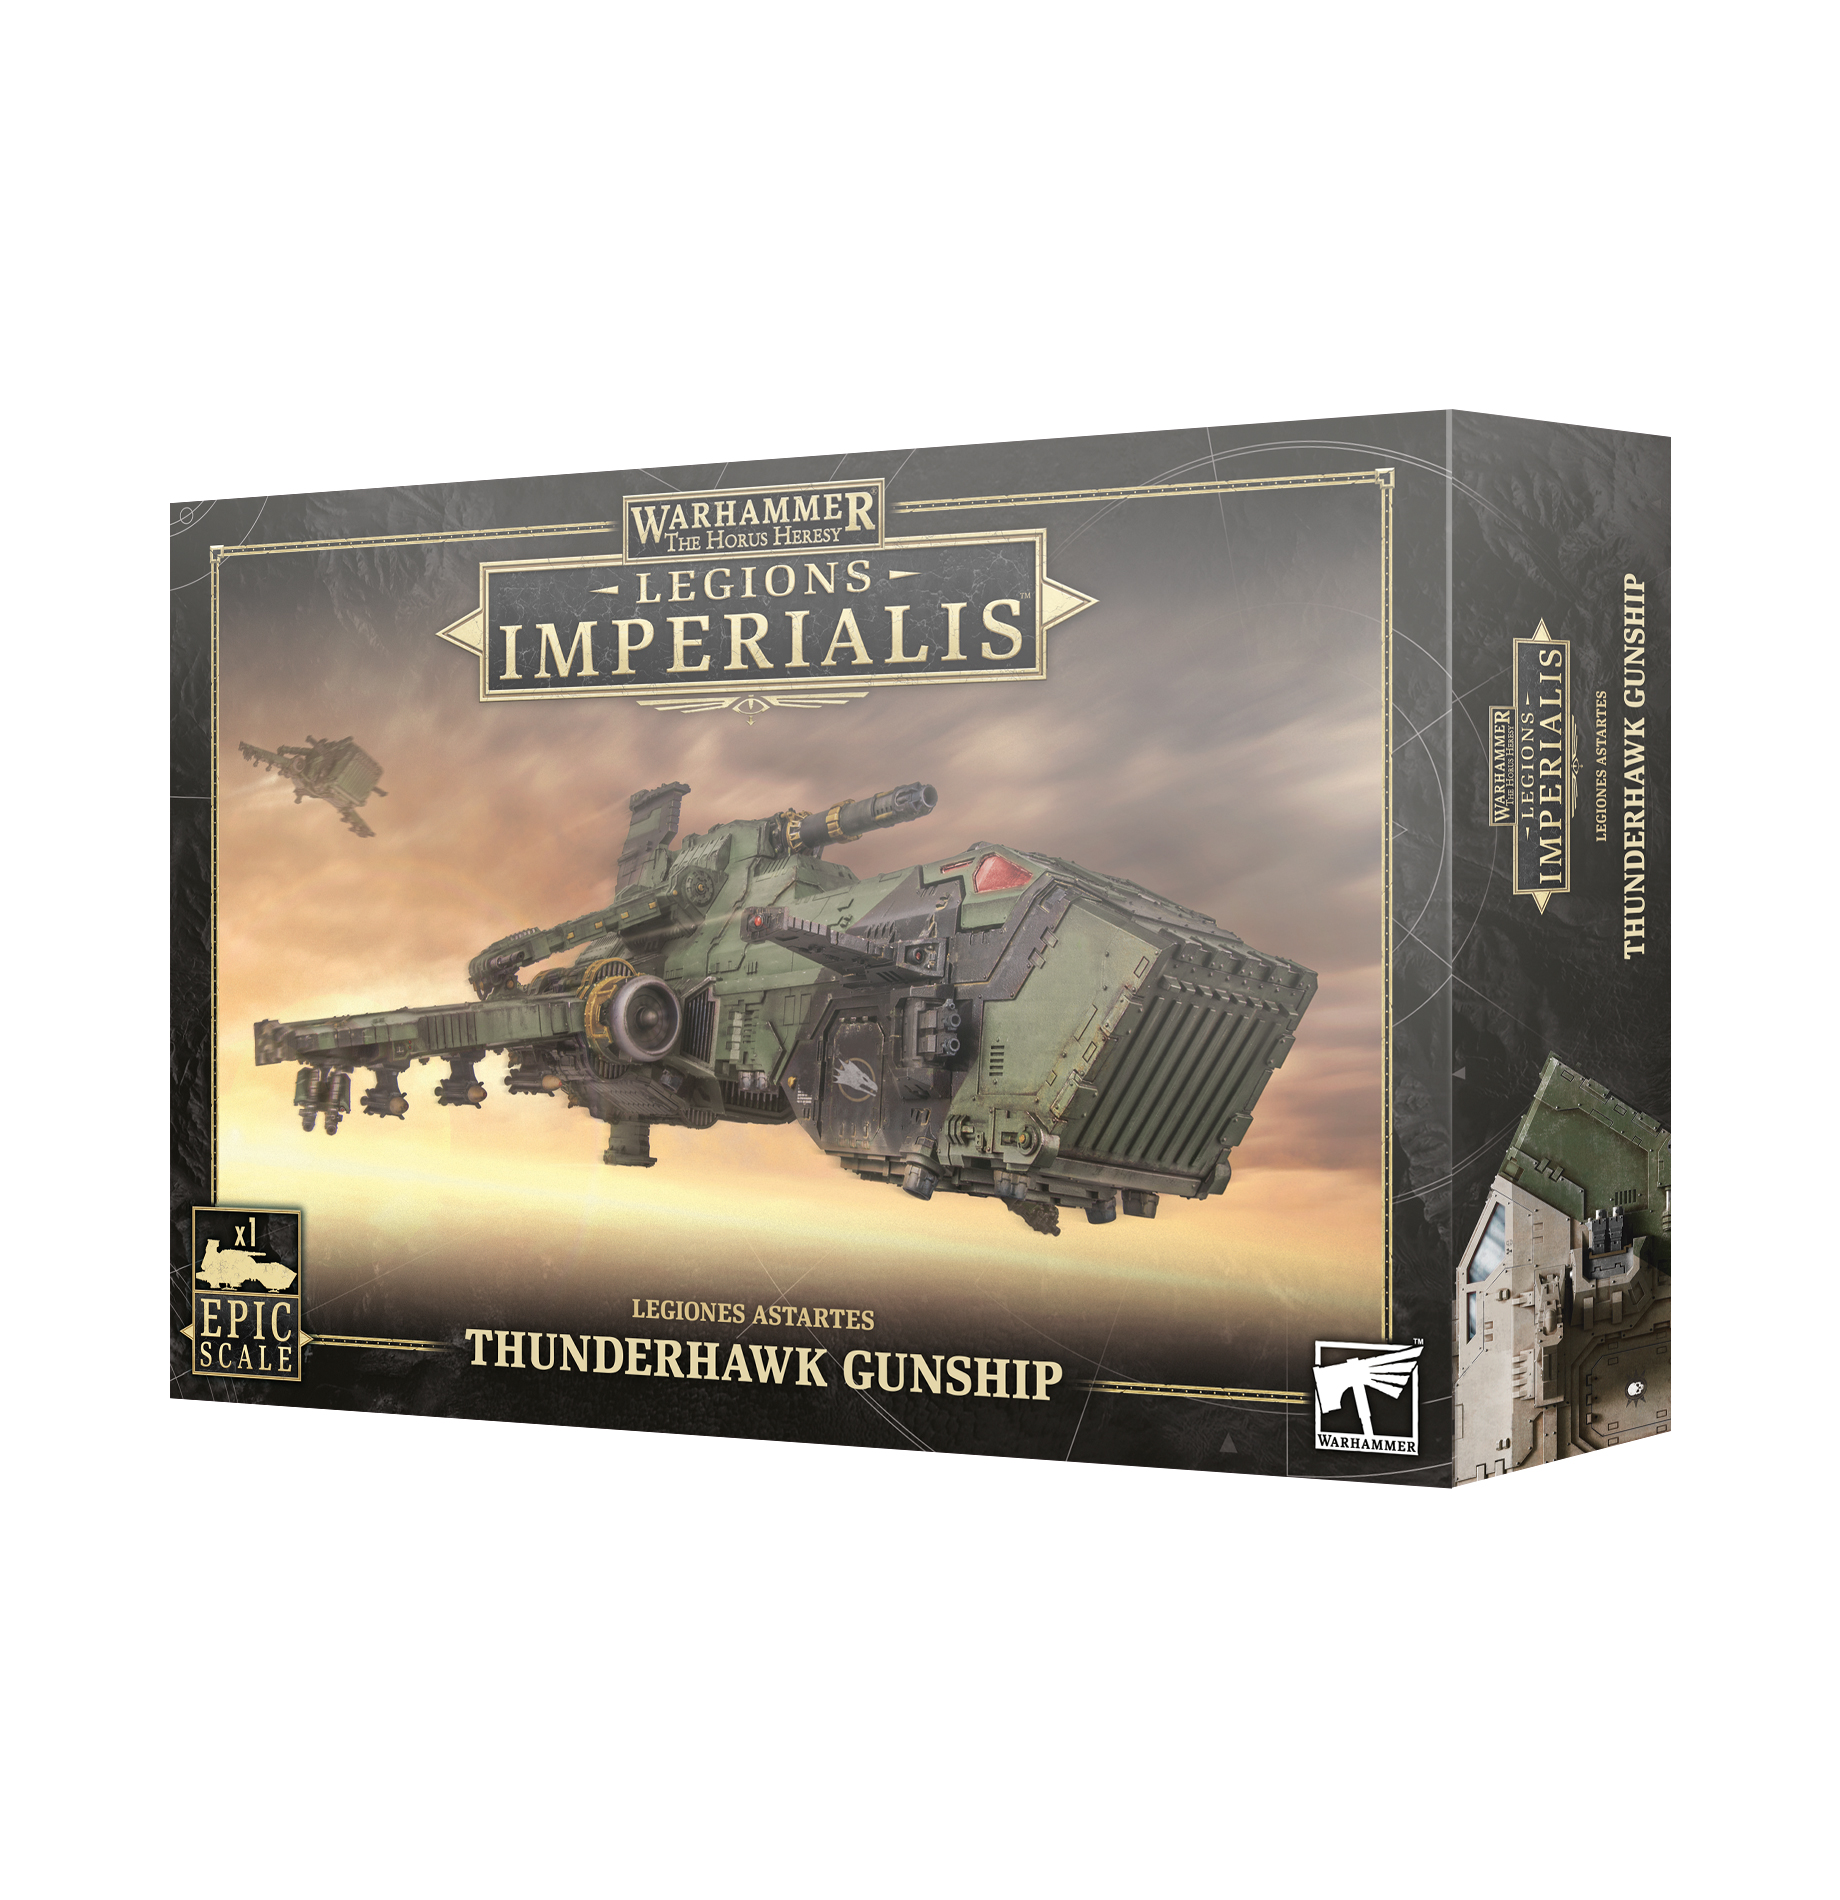 Legions Imperialis: Legiones Astartes Thunderhawk Gunship 